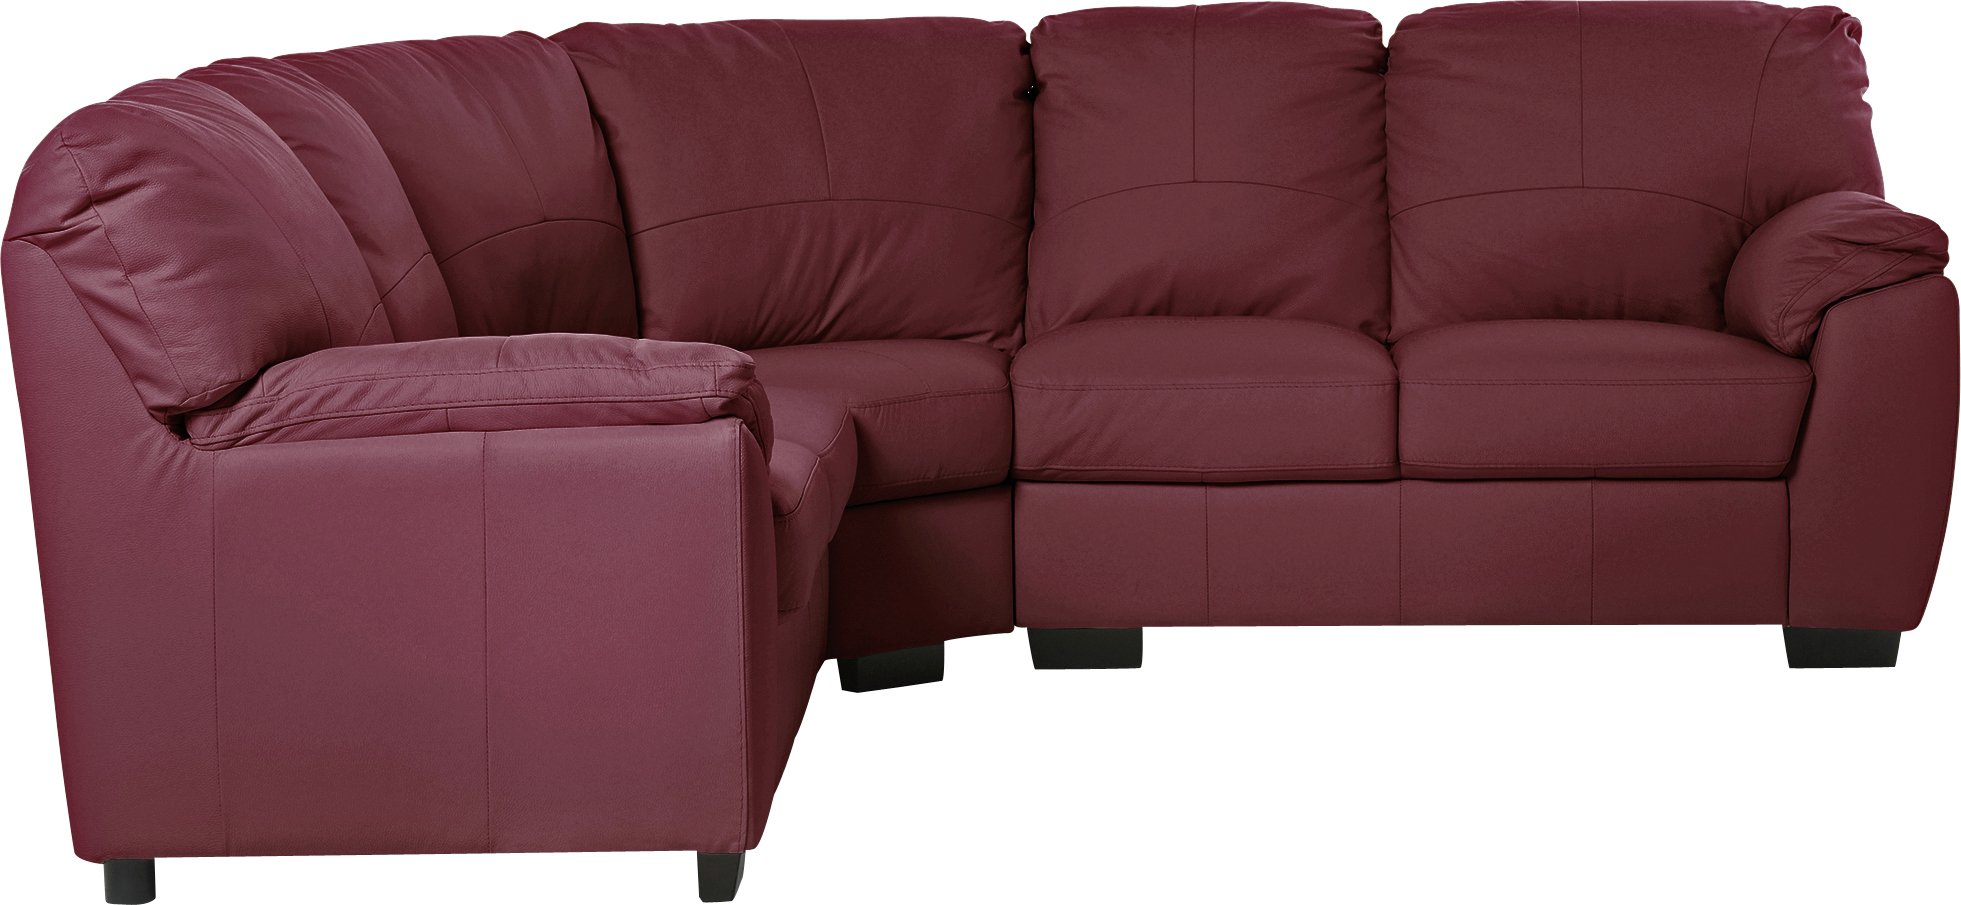 argos faux leather corner sofa